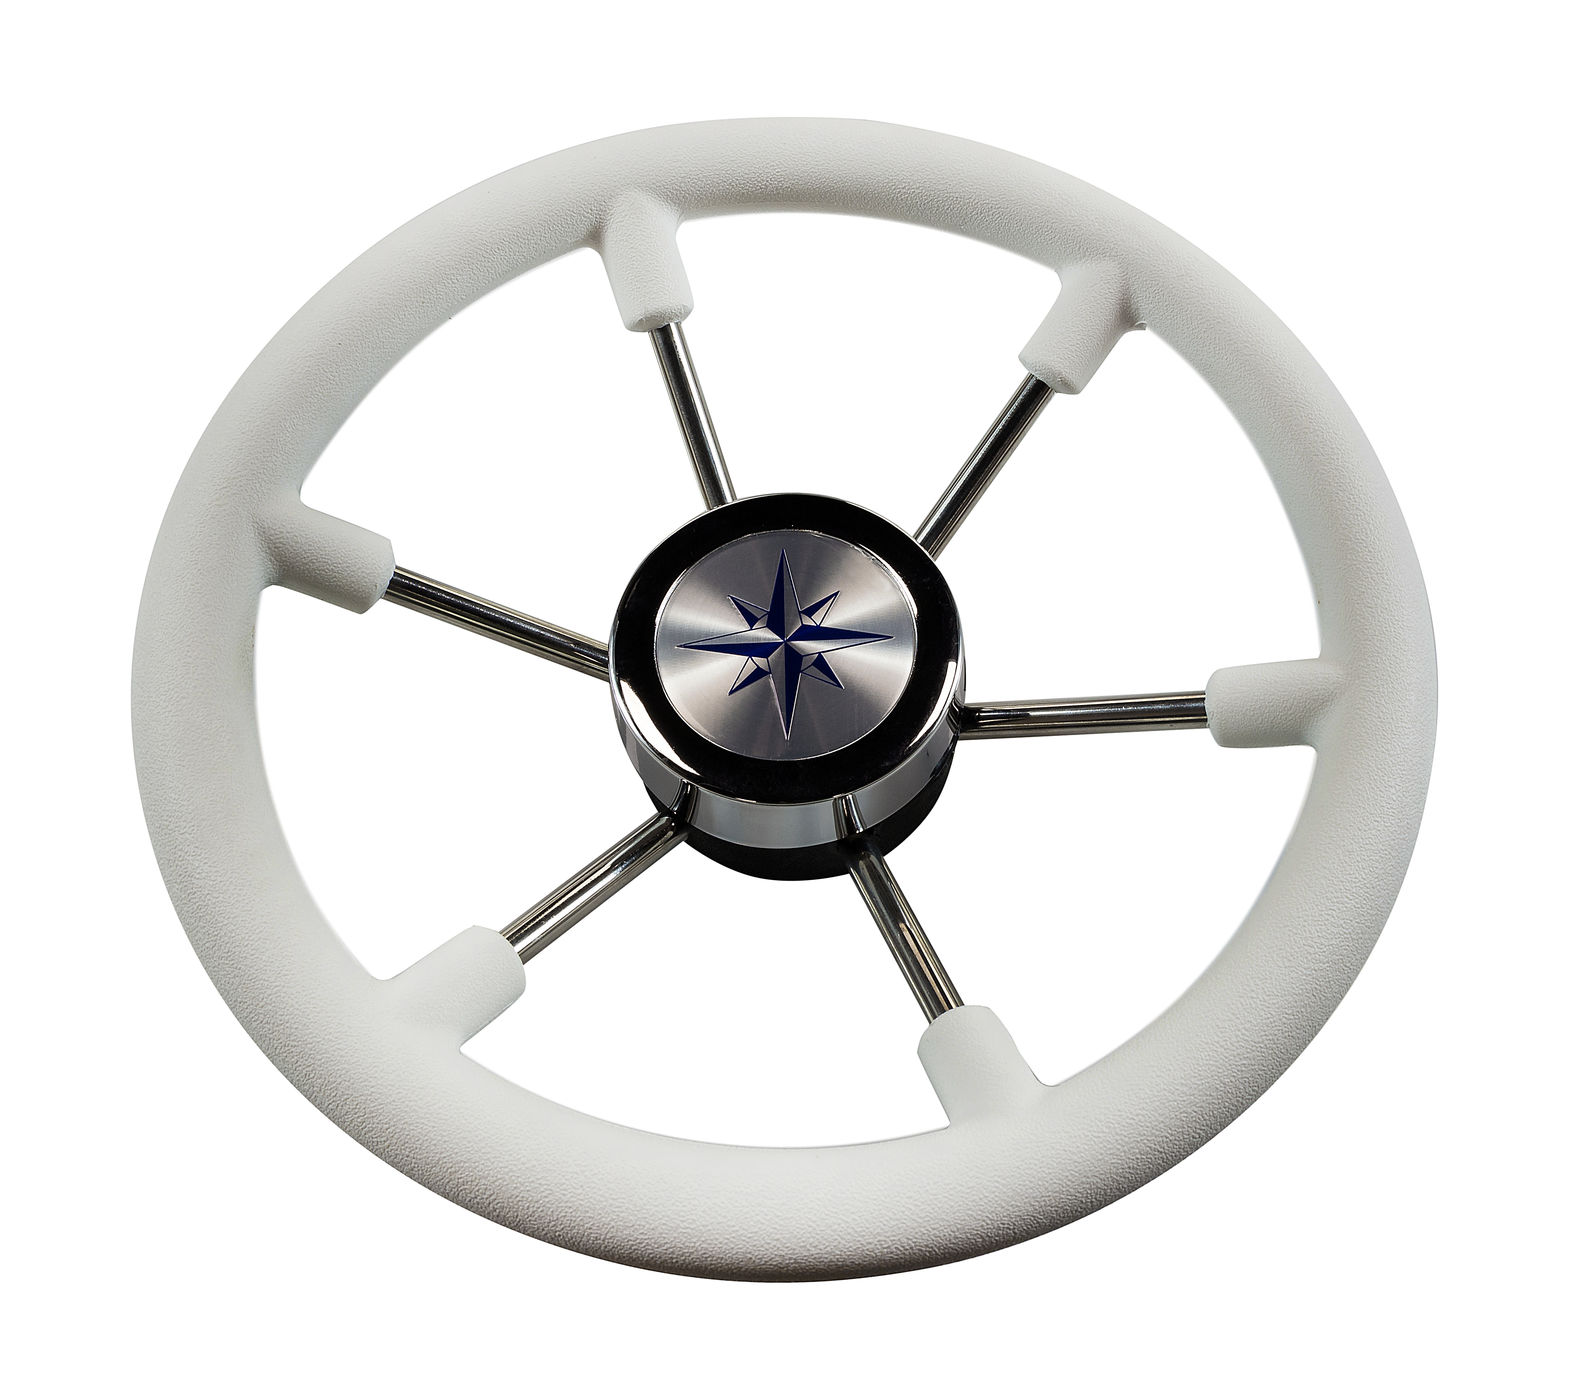 Рулевое колесо LEADER PLAST белый обод серебряные спицы д. 330 мм Volanti Luisi VN8330-08